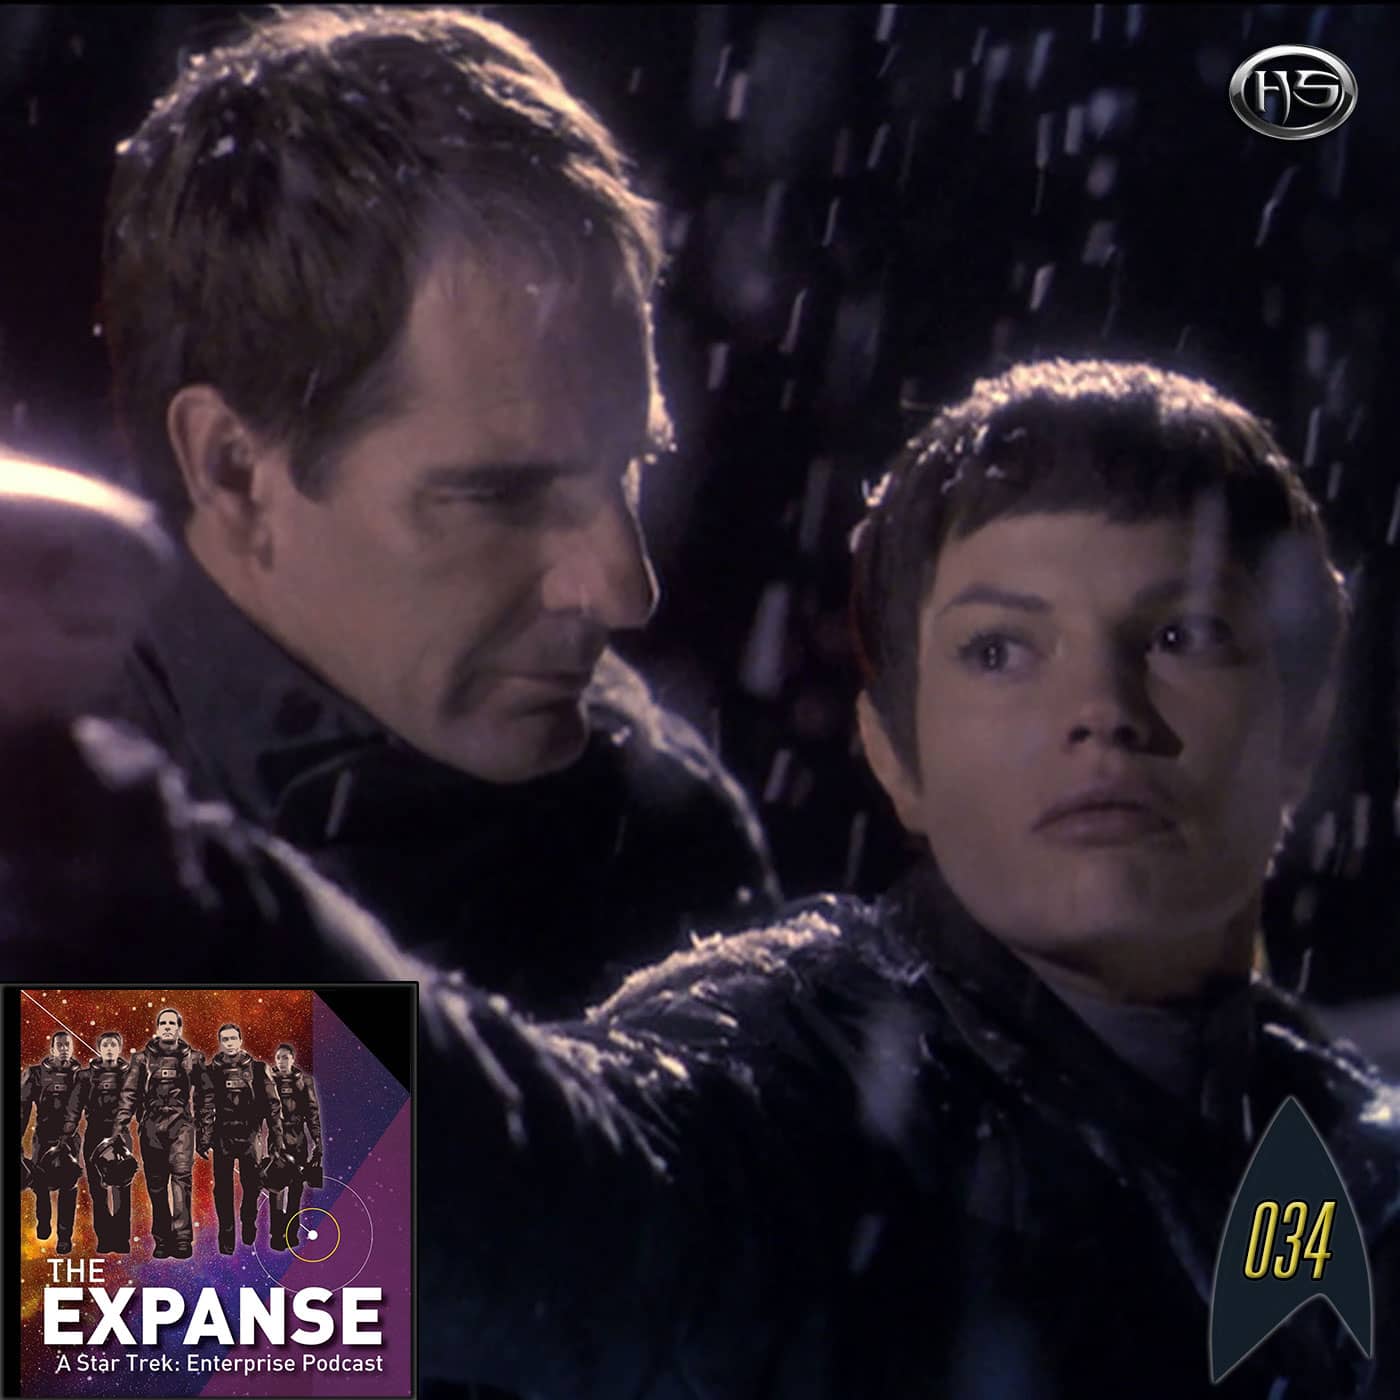 The Expanse Episode 34